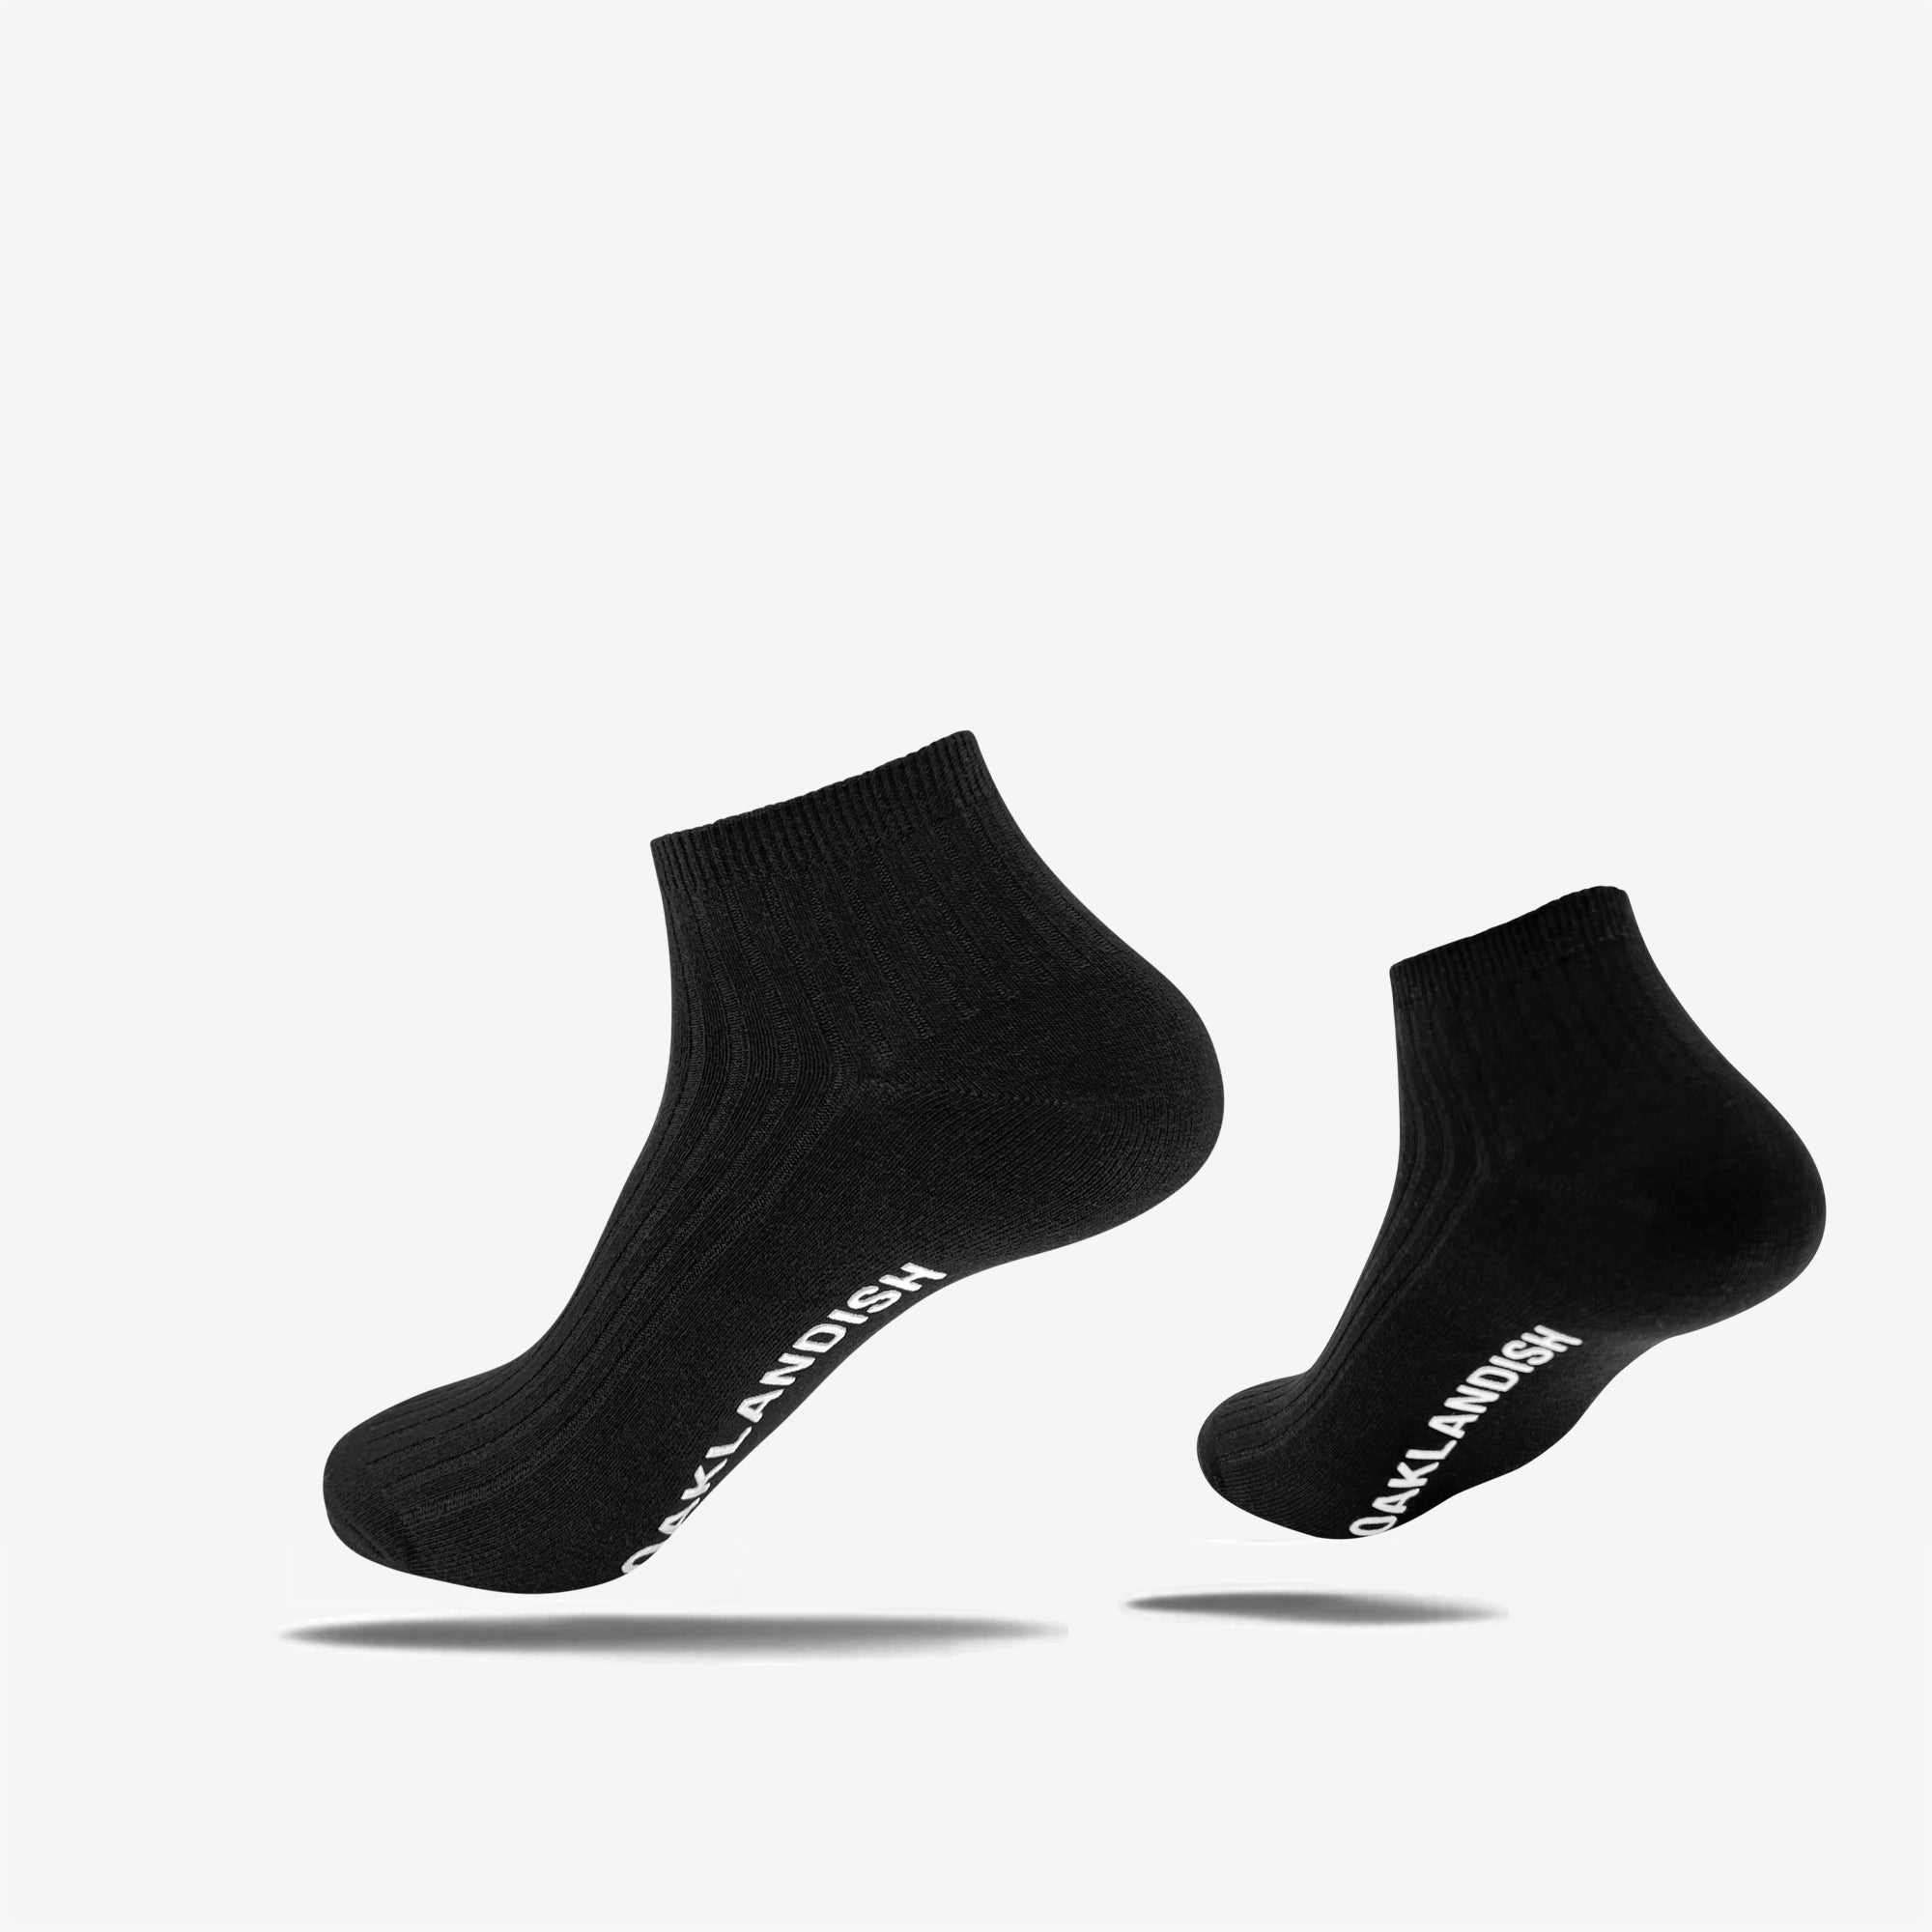 Low-cut slate black crew socks with a white Oaklandish wordmark on the sole.